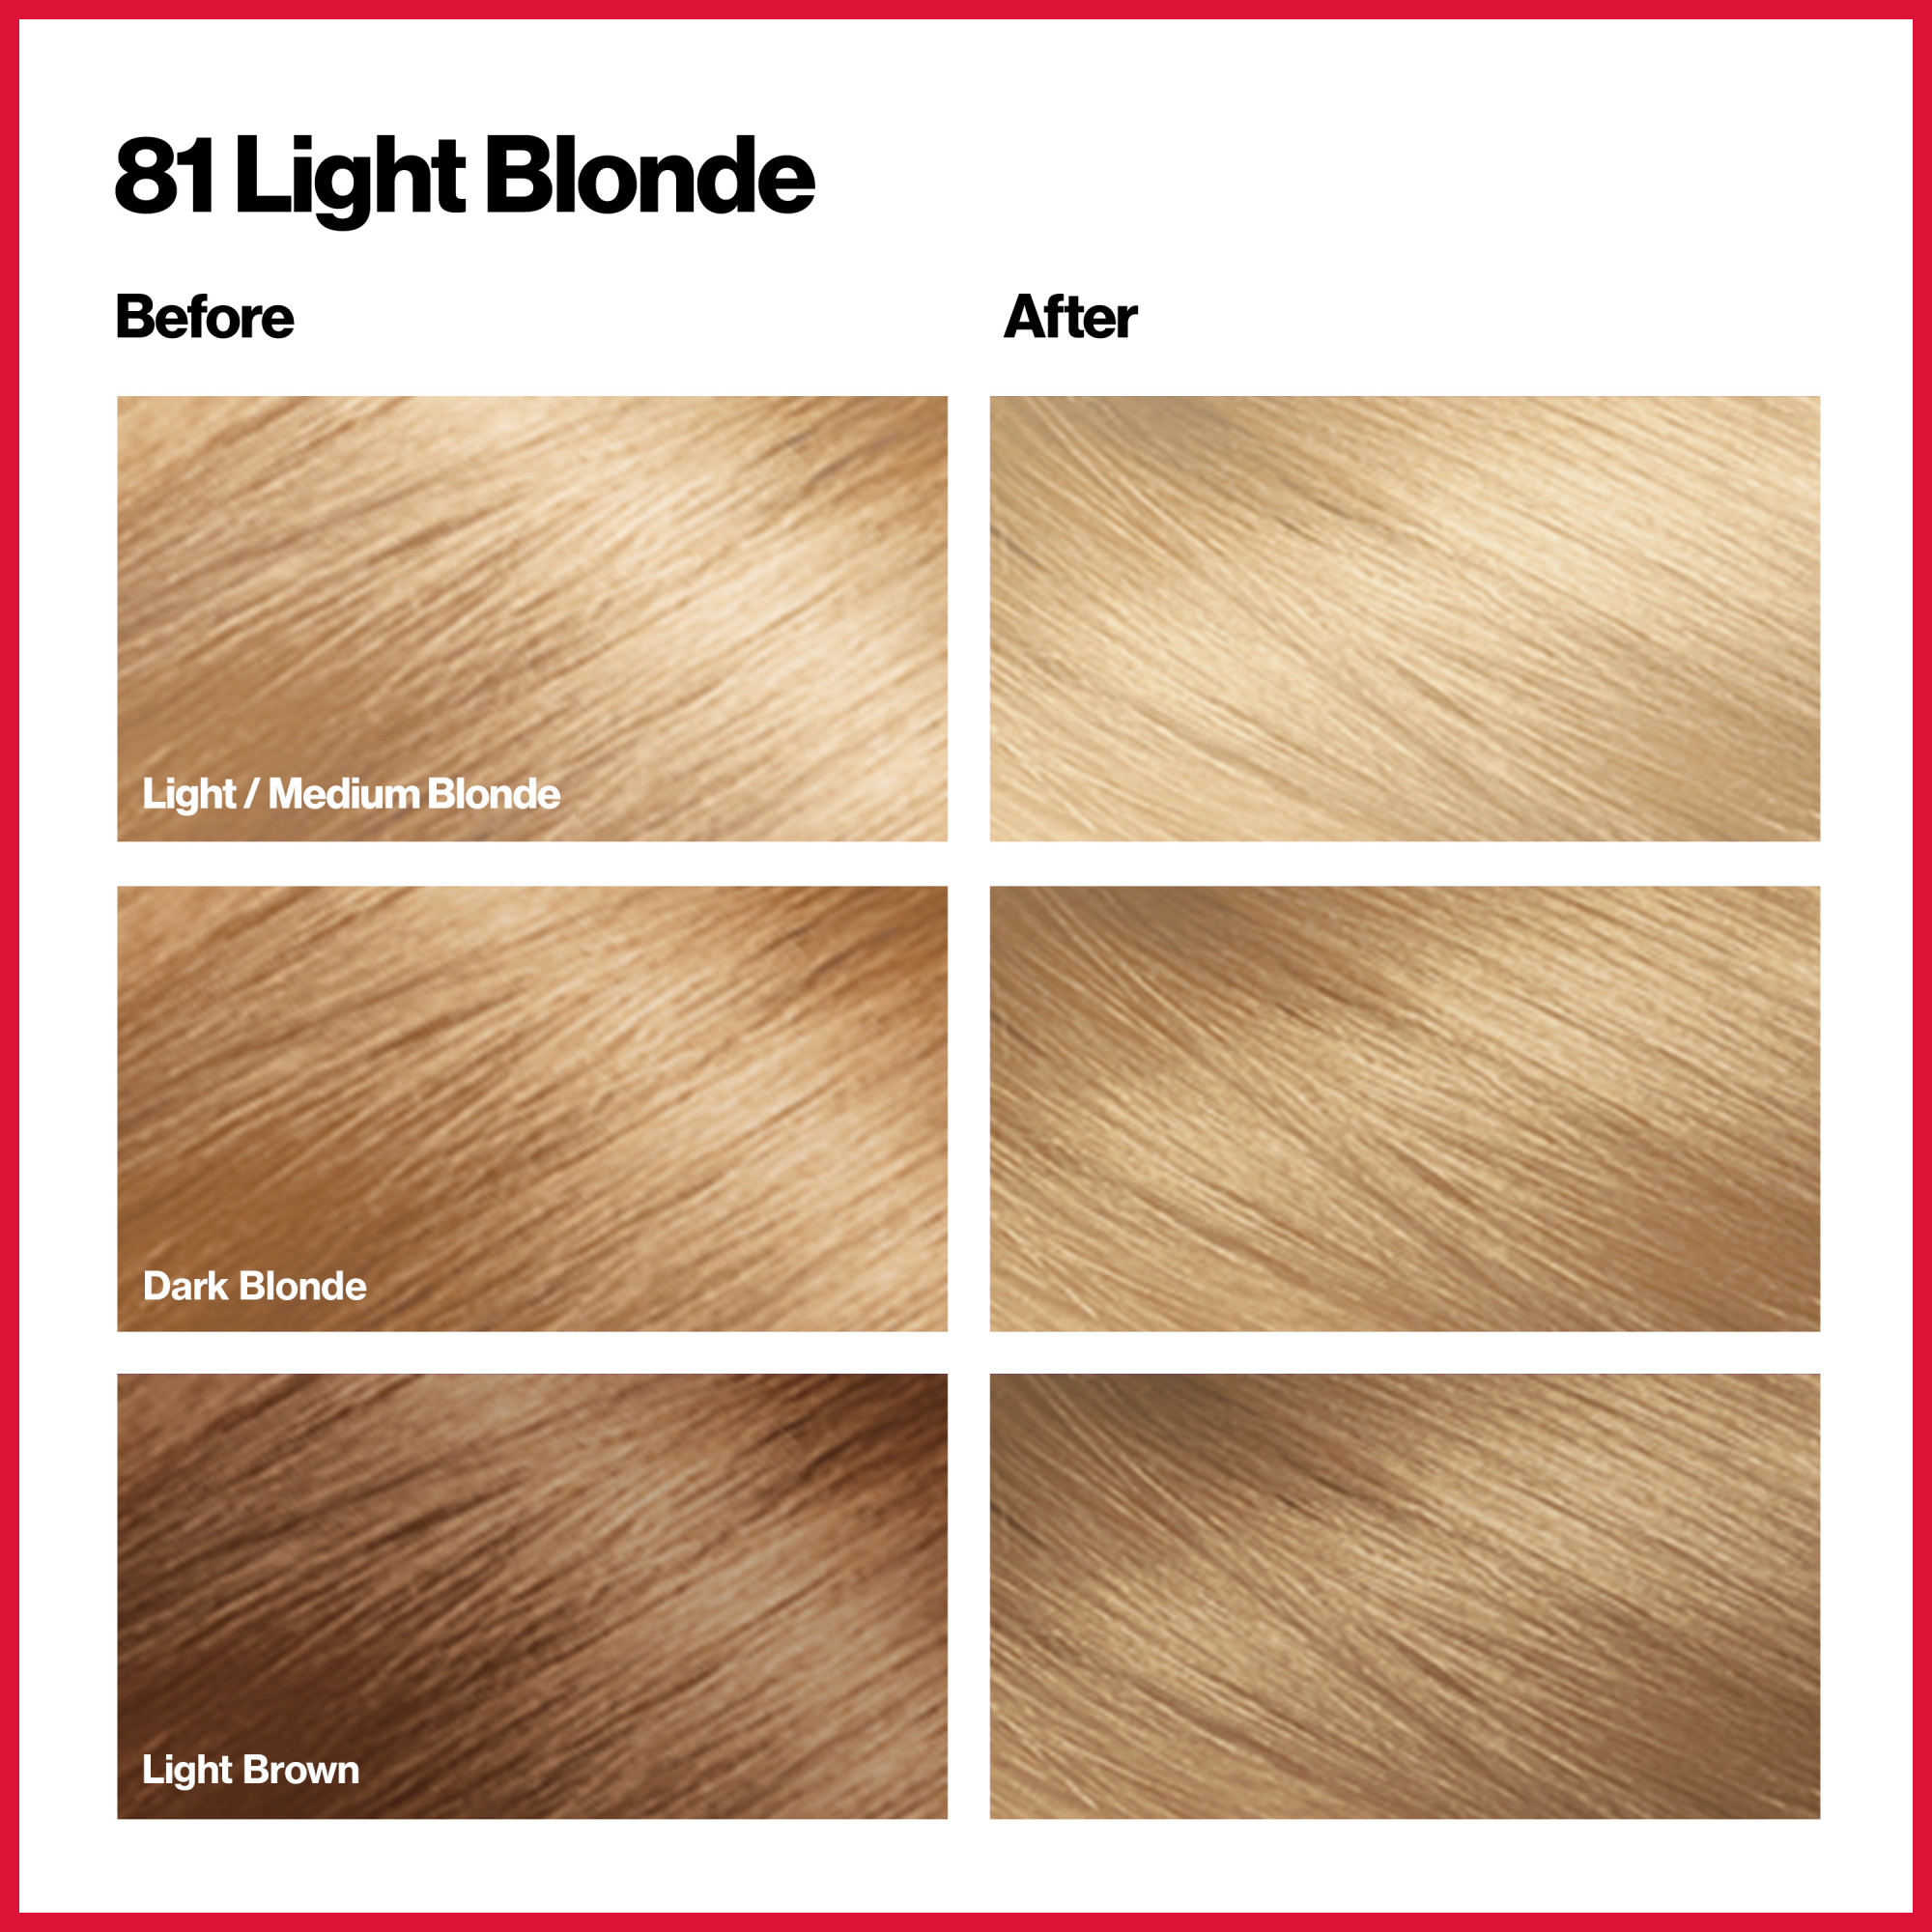 NEW Revlon Colorsilk Beautiful Permanent Hair Color, No Mess Formula,  081 Light Blonde, 1 Pack - image 3 of 14